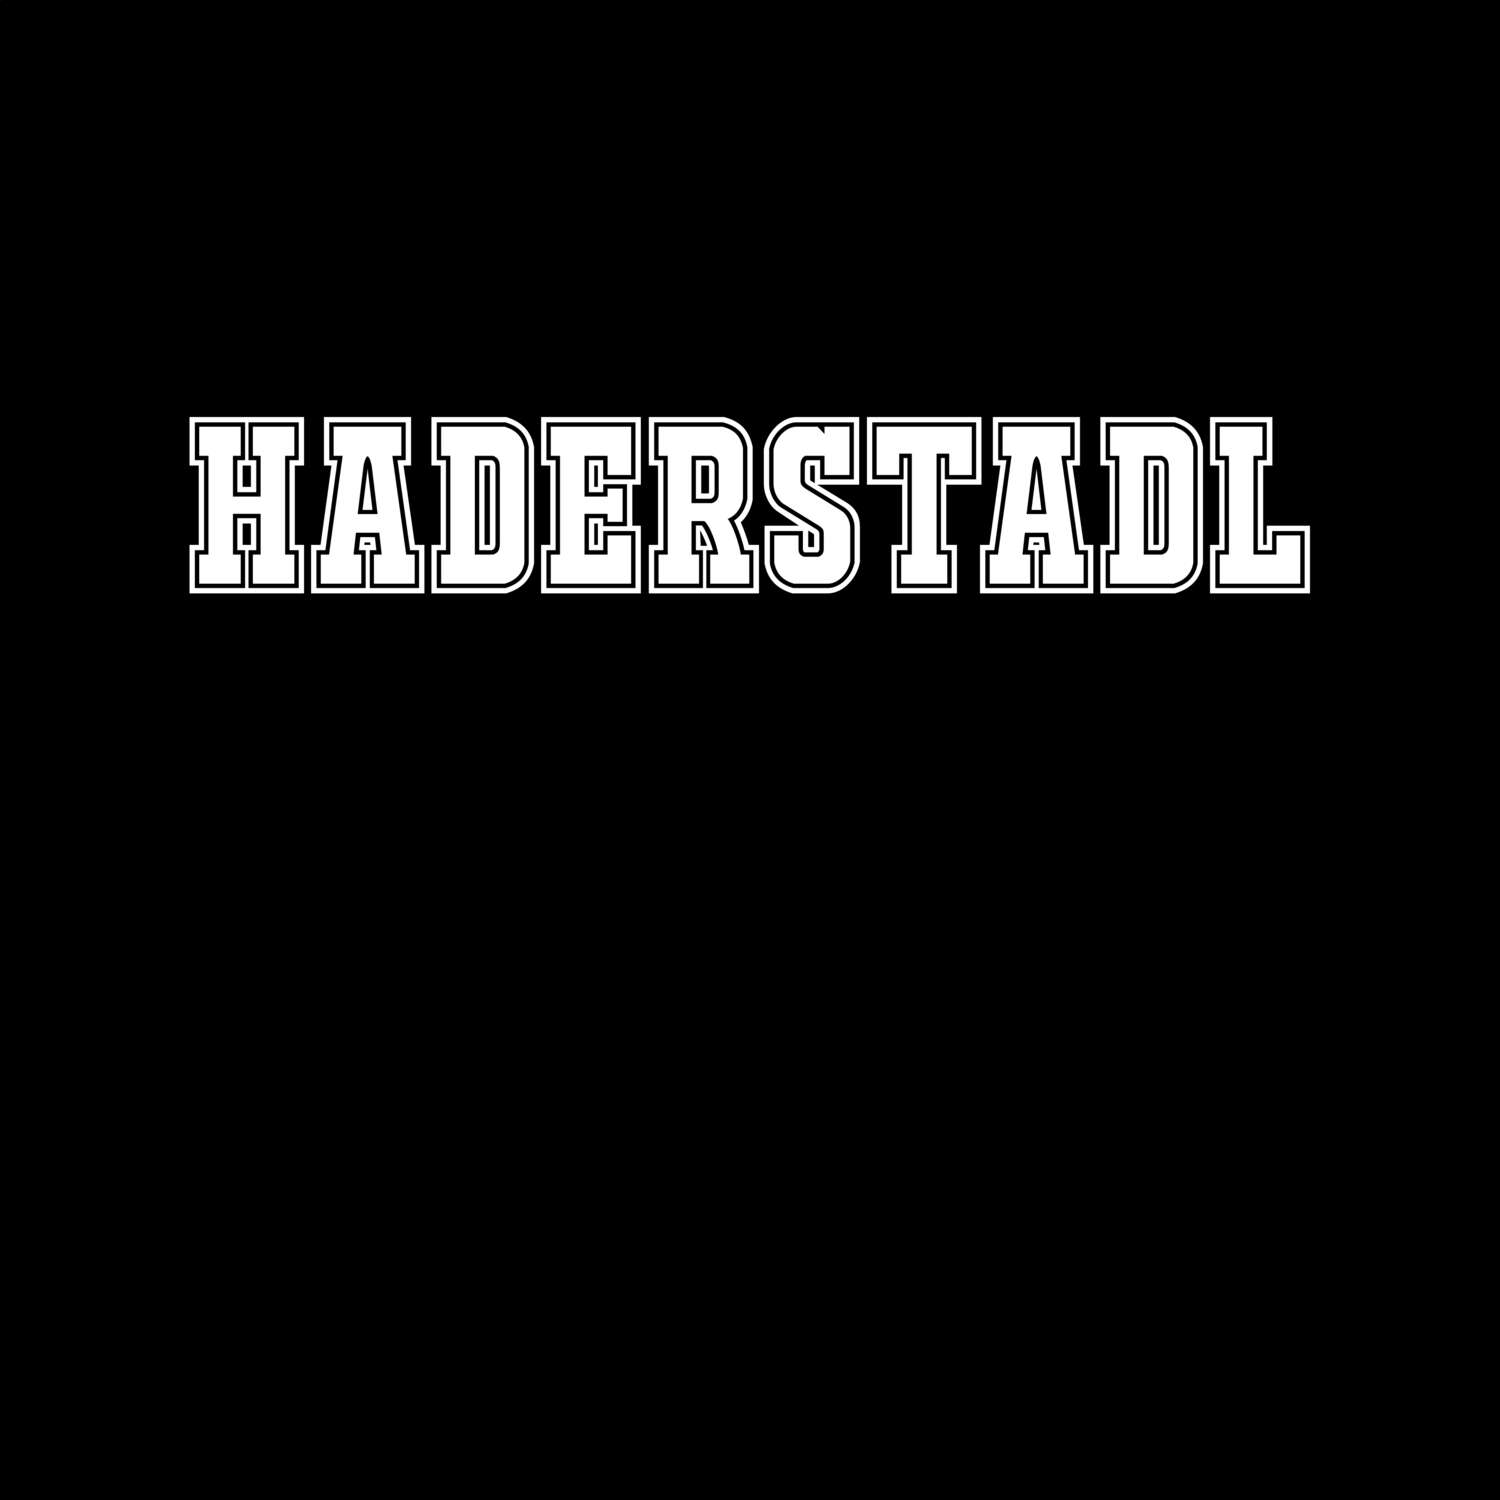 Haderstadl T-Shirt »Classic«